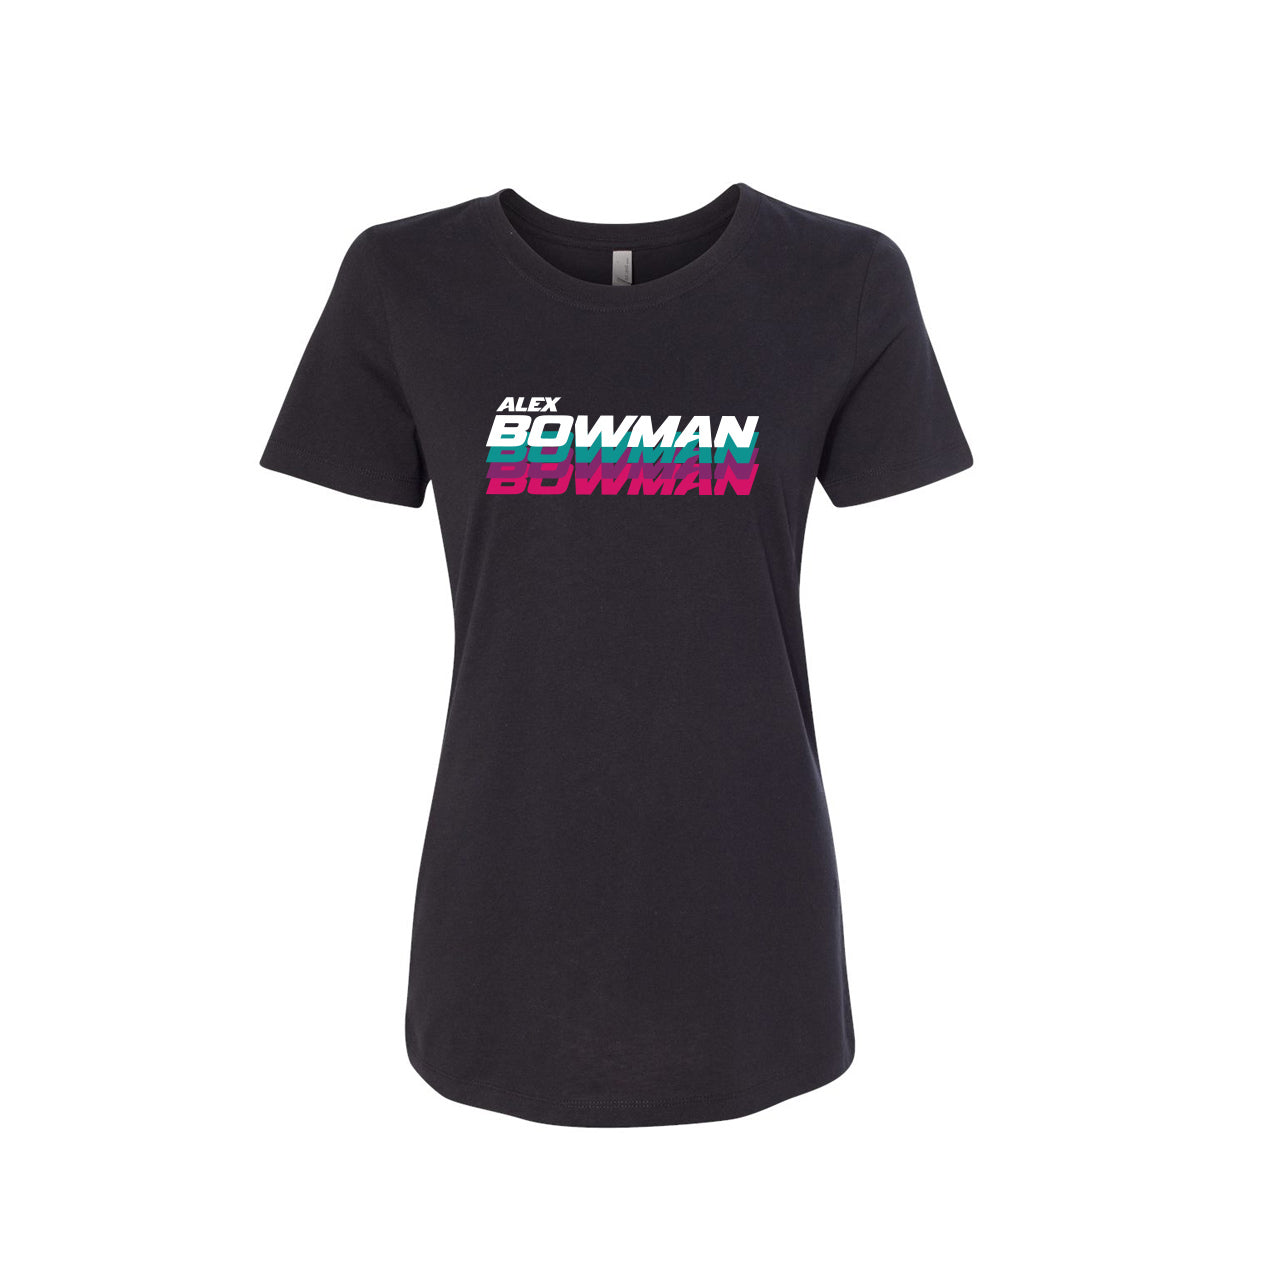 Bowman Repeater Ladies T-Shirt - Black